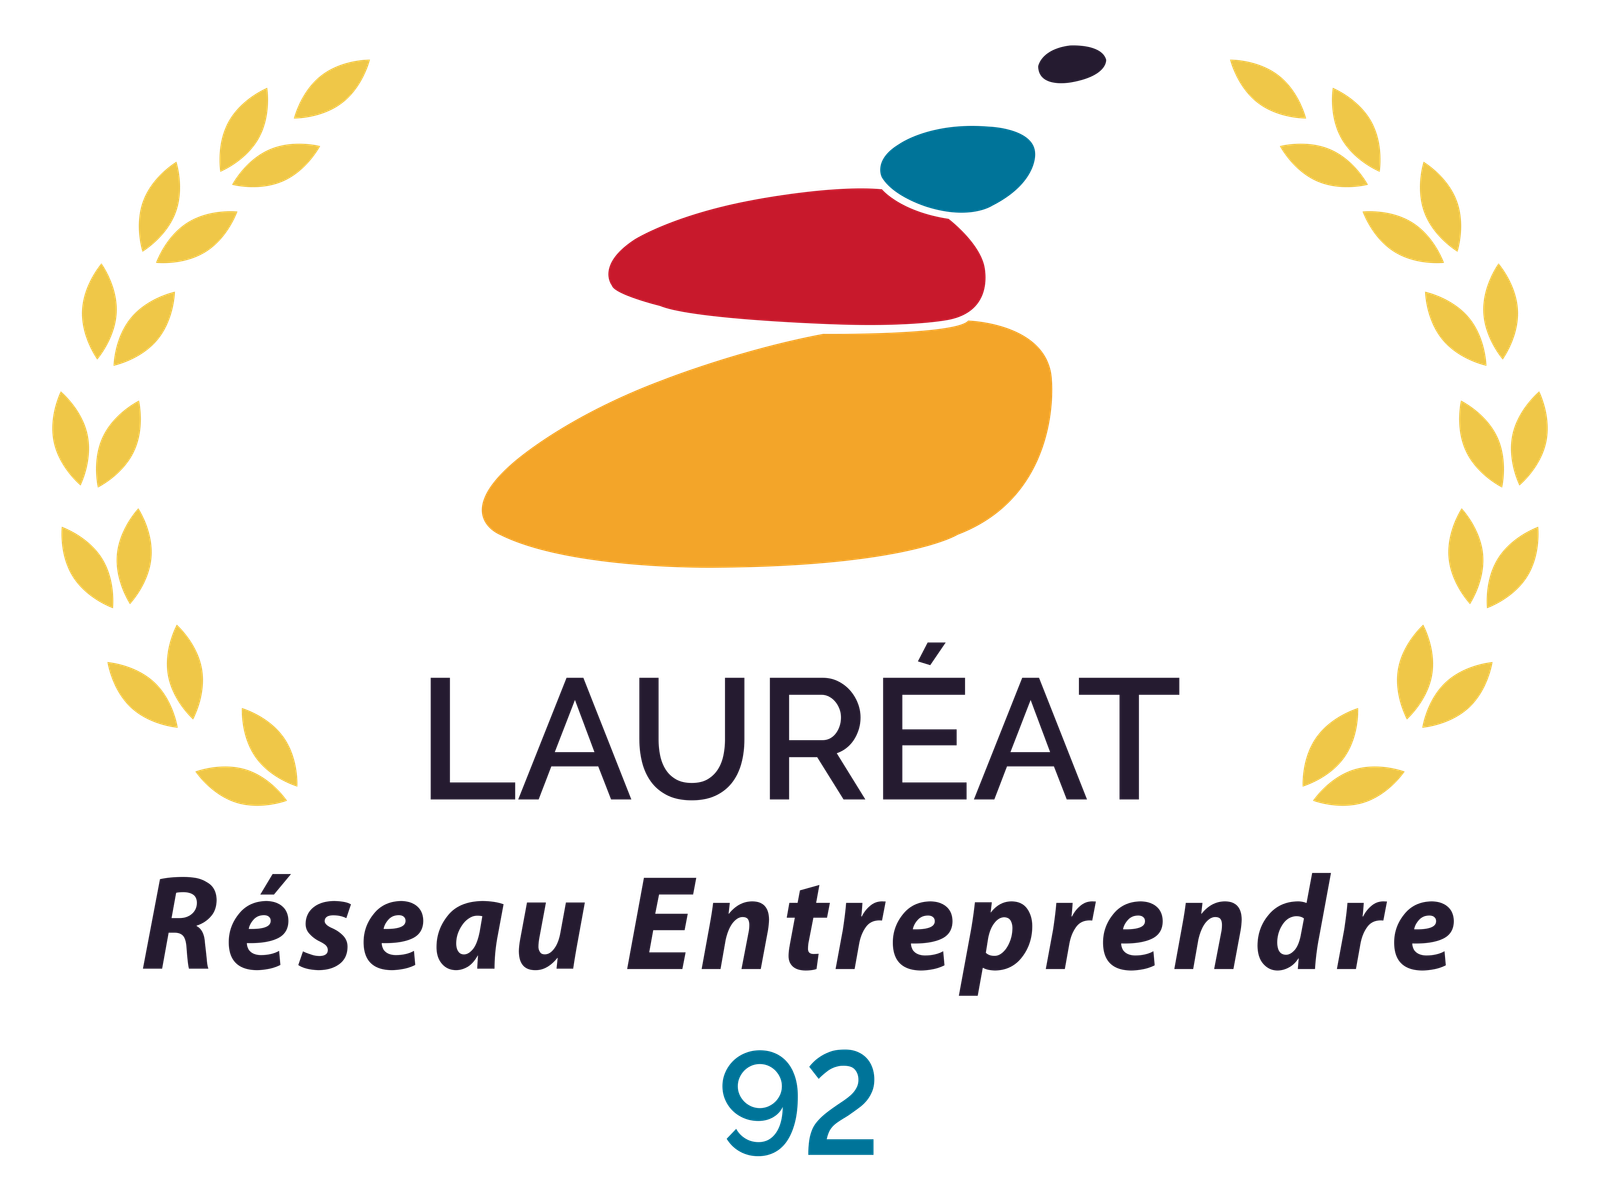 Laureat Reseau Entreprendre 92